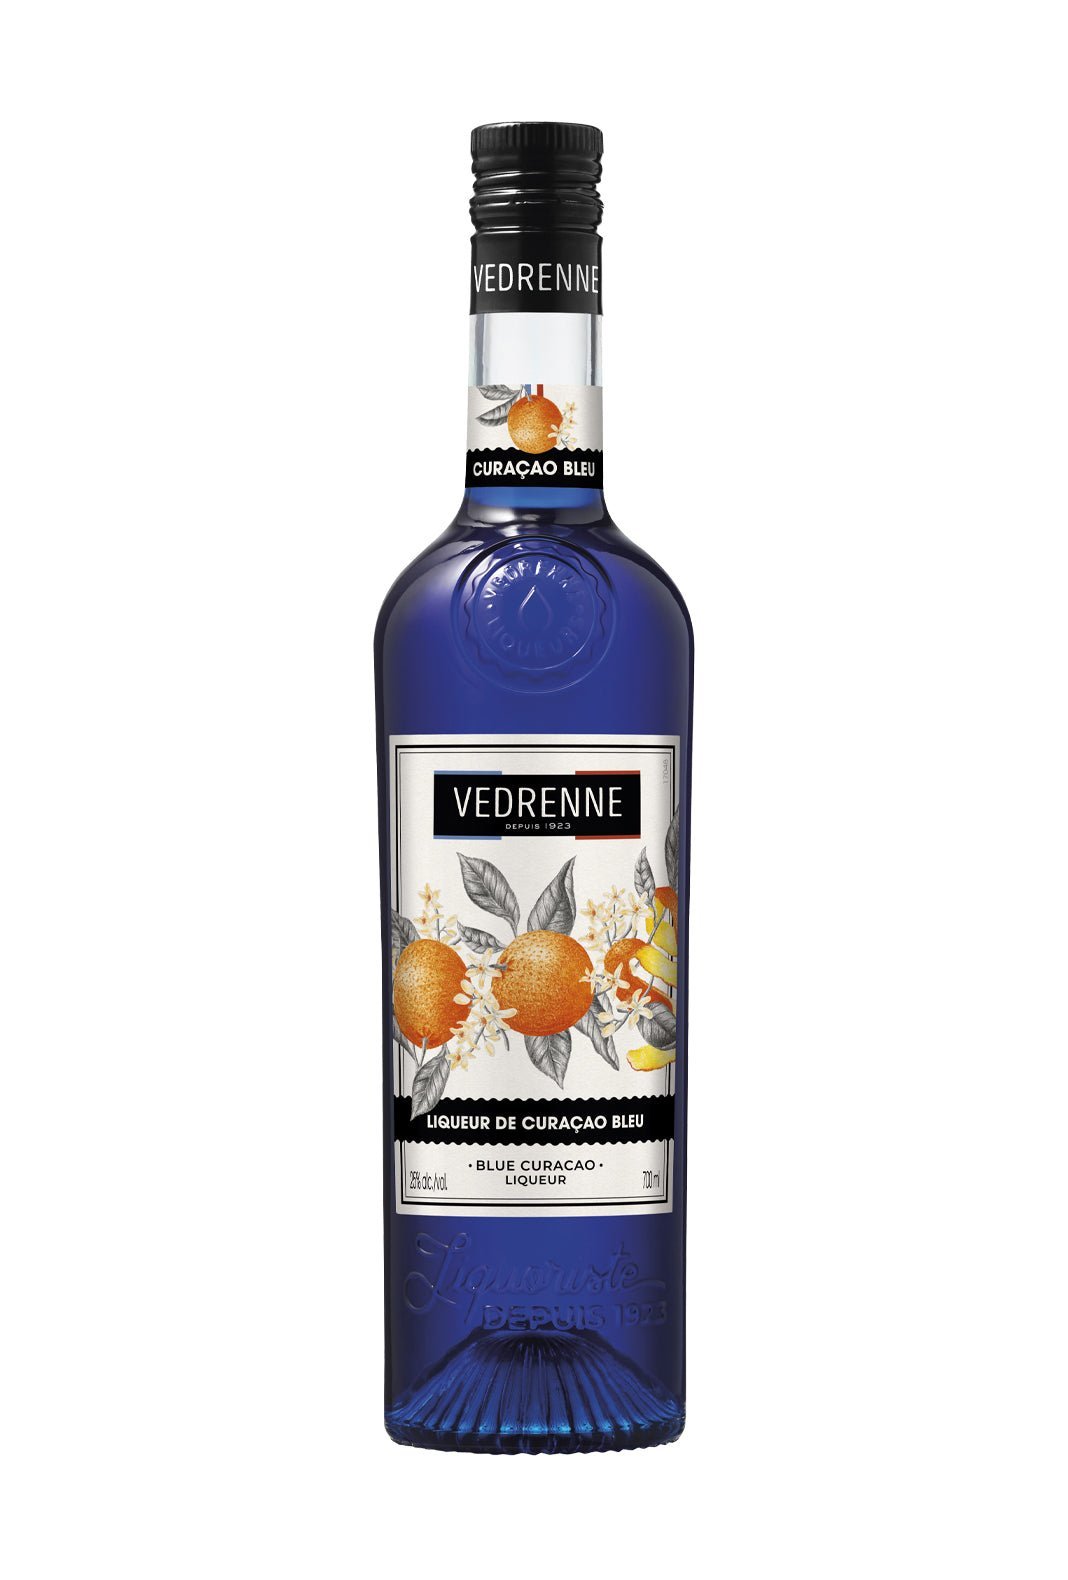 Vedrenne Liqueur Curacao Bleu (Blue Curacao) 25% 700ml | Liqueurs | Shop online at Spirits of France